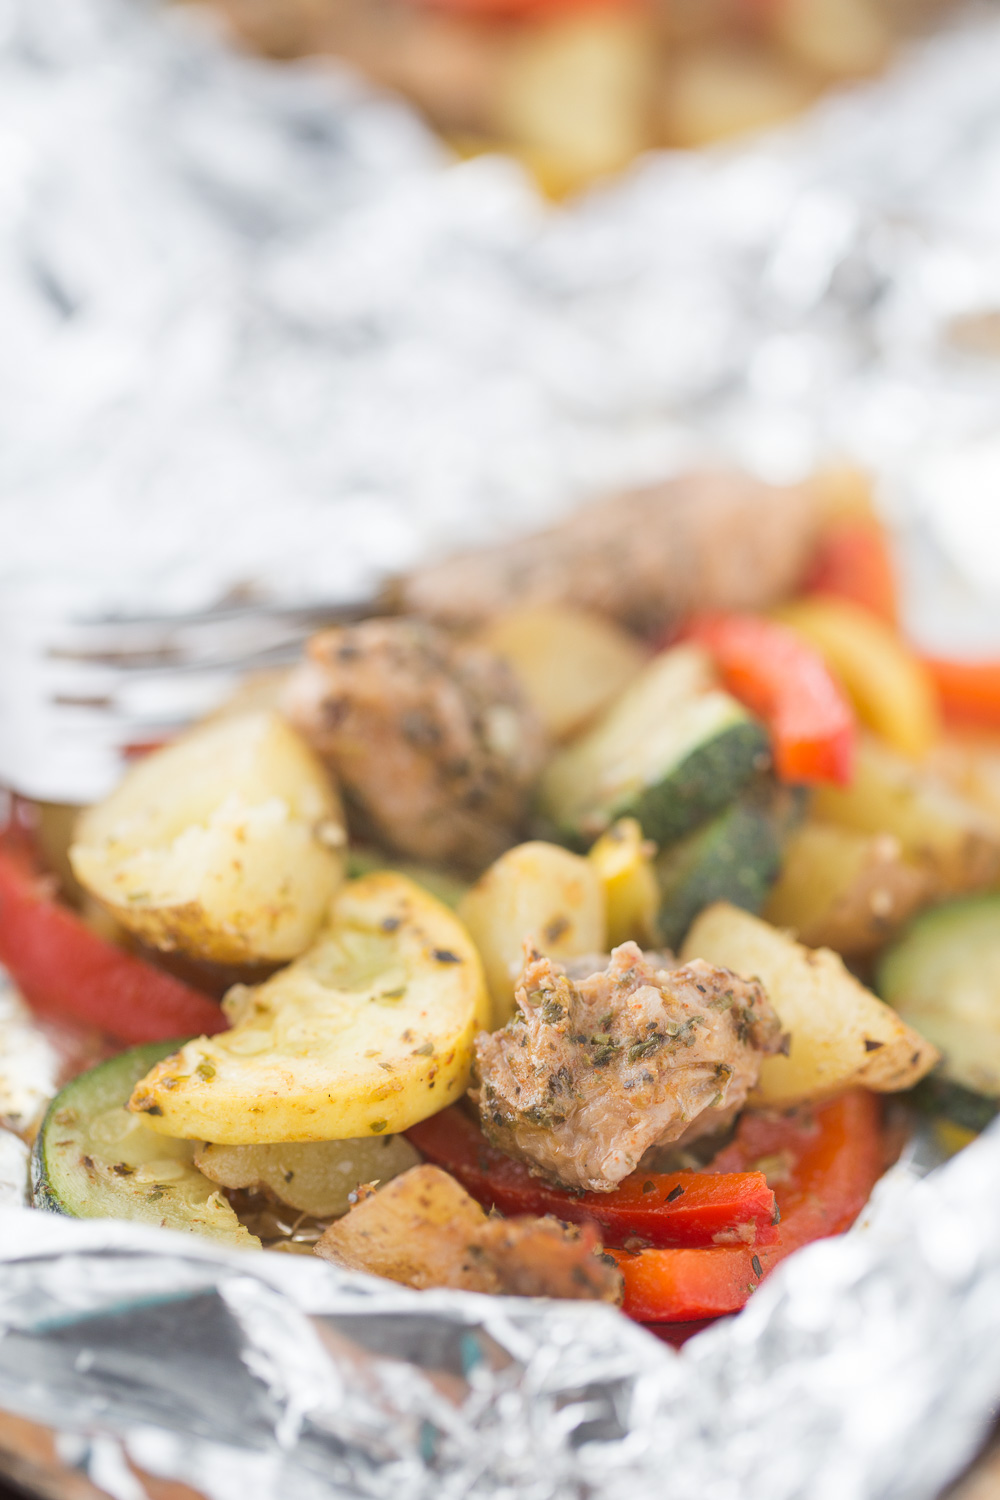 Foil Packet Meal | Turkey Sausage | Veggies | Camping Food |